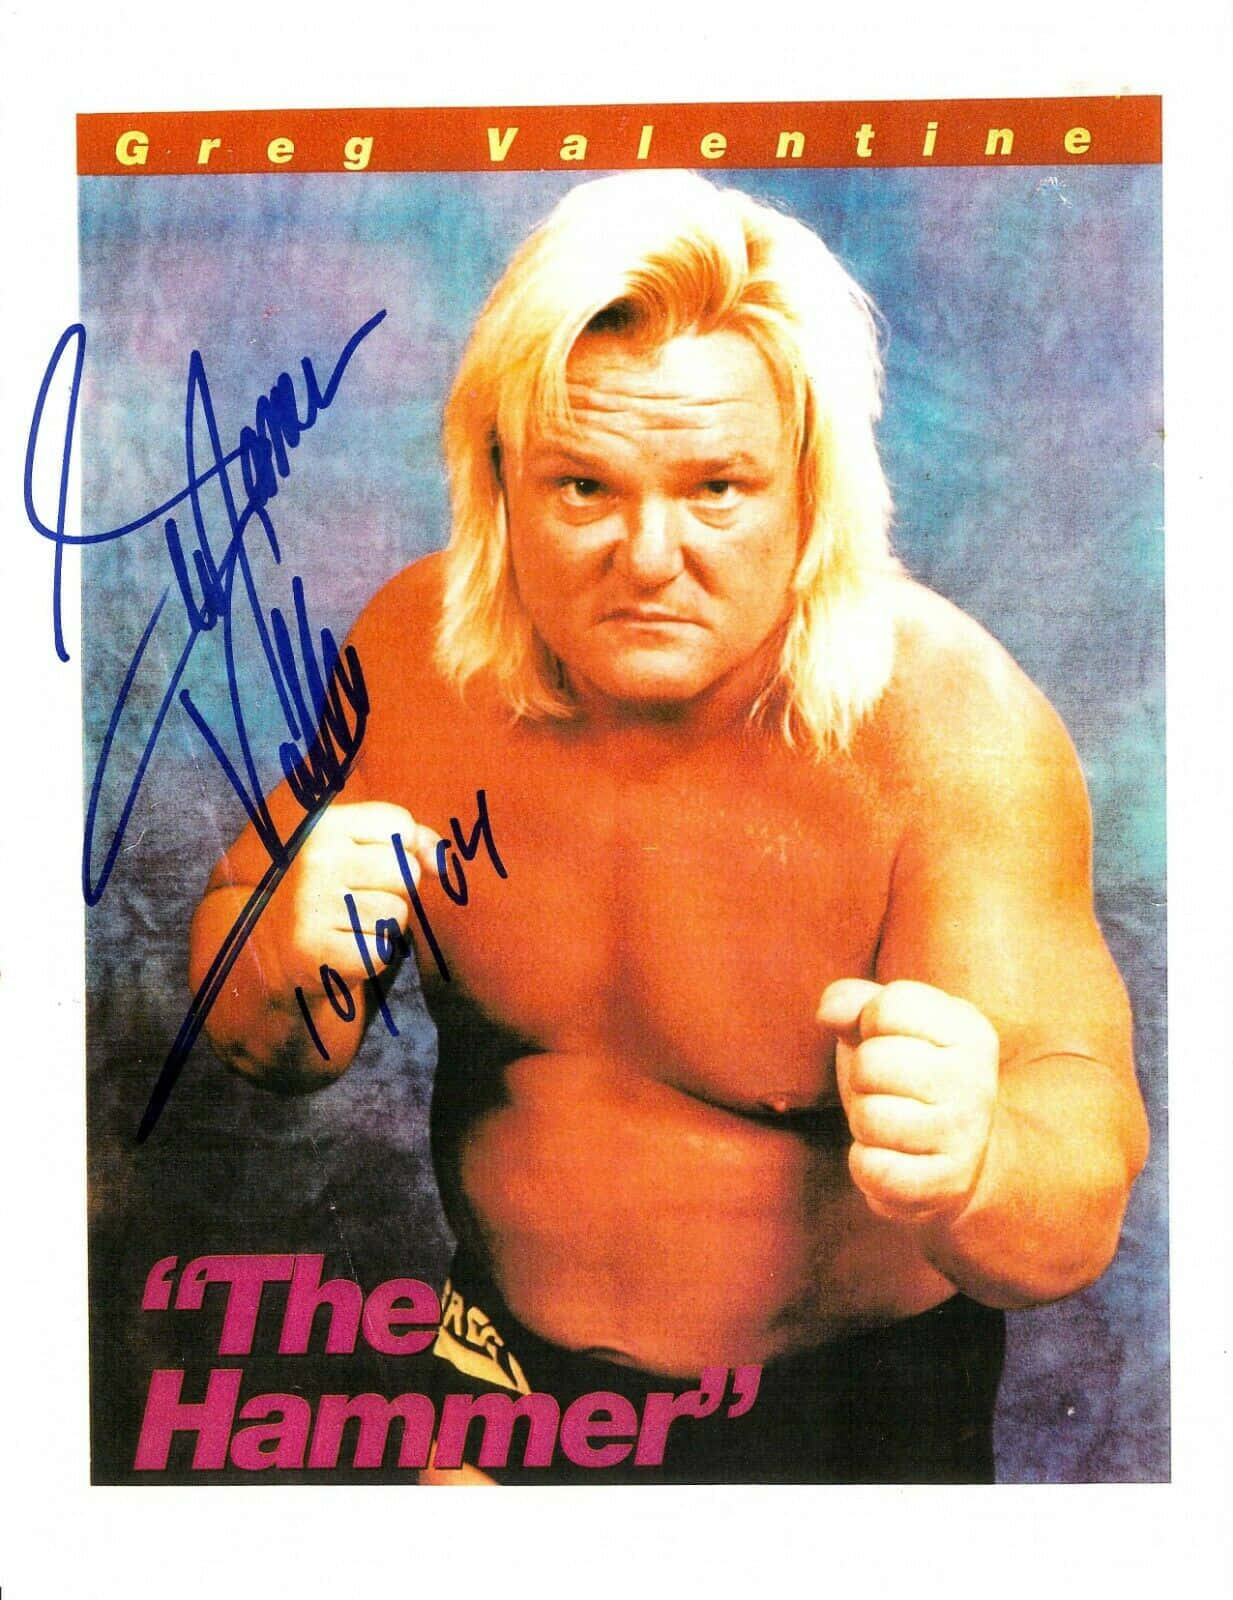 Caption: "Greg Valentine, a Legend of Wrestling, Poses for a Signed Promotional Photo" Wallpaper